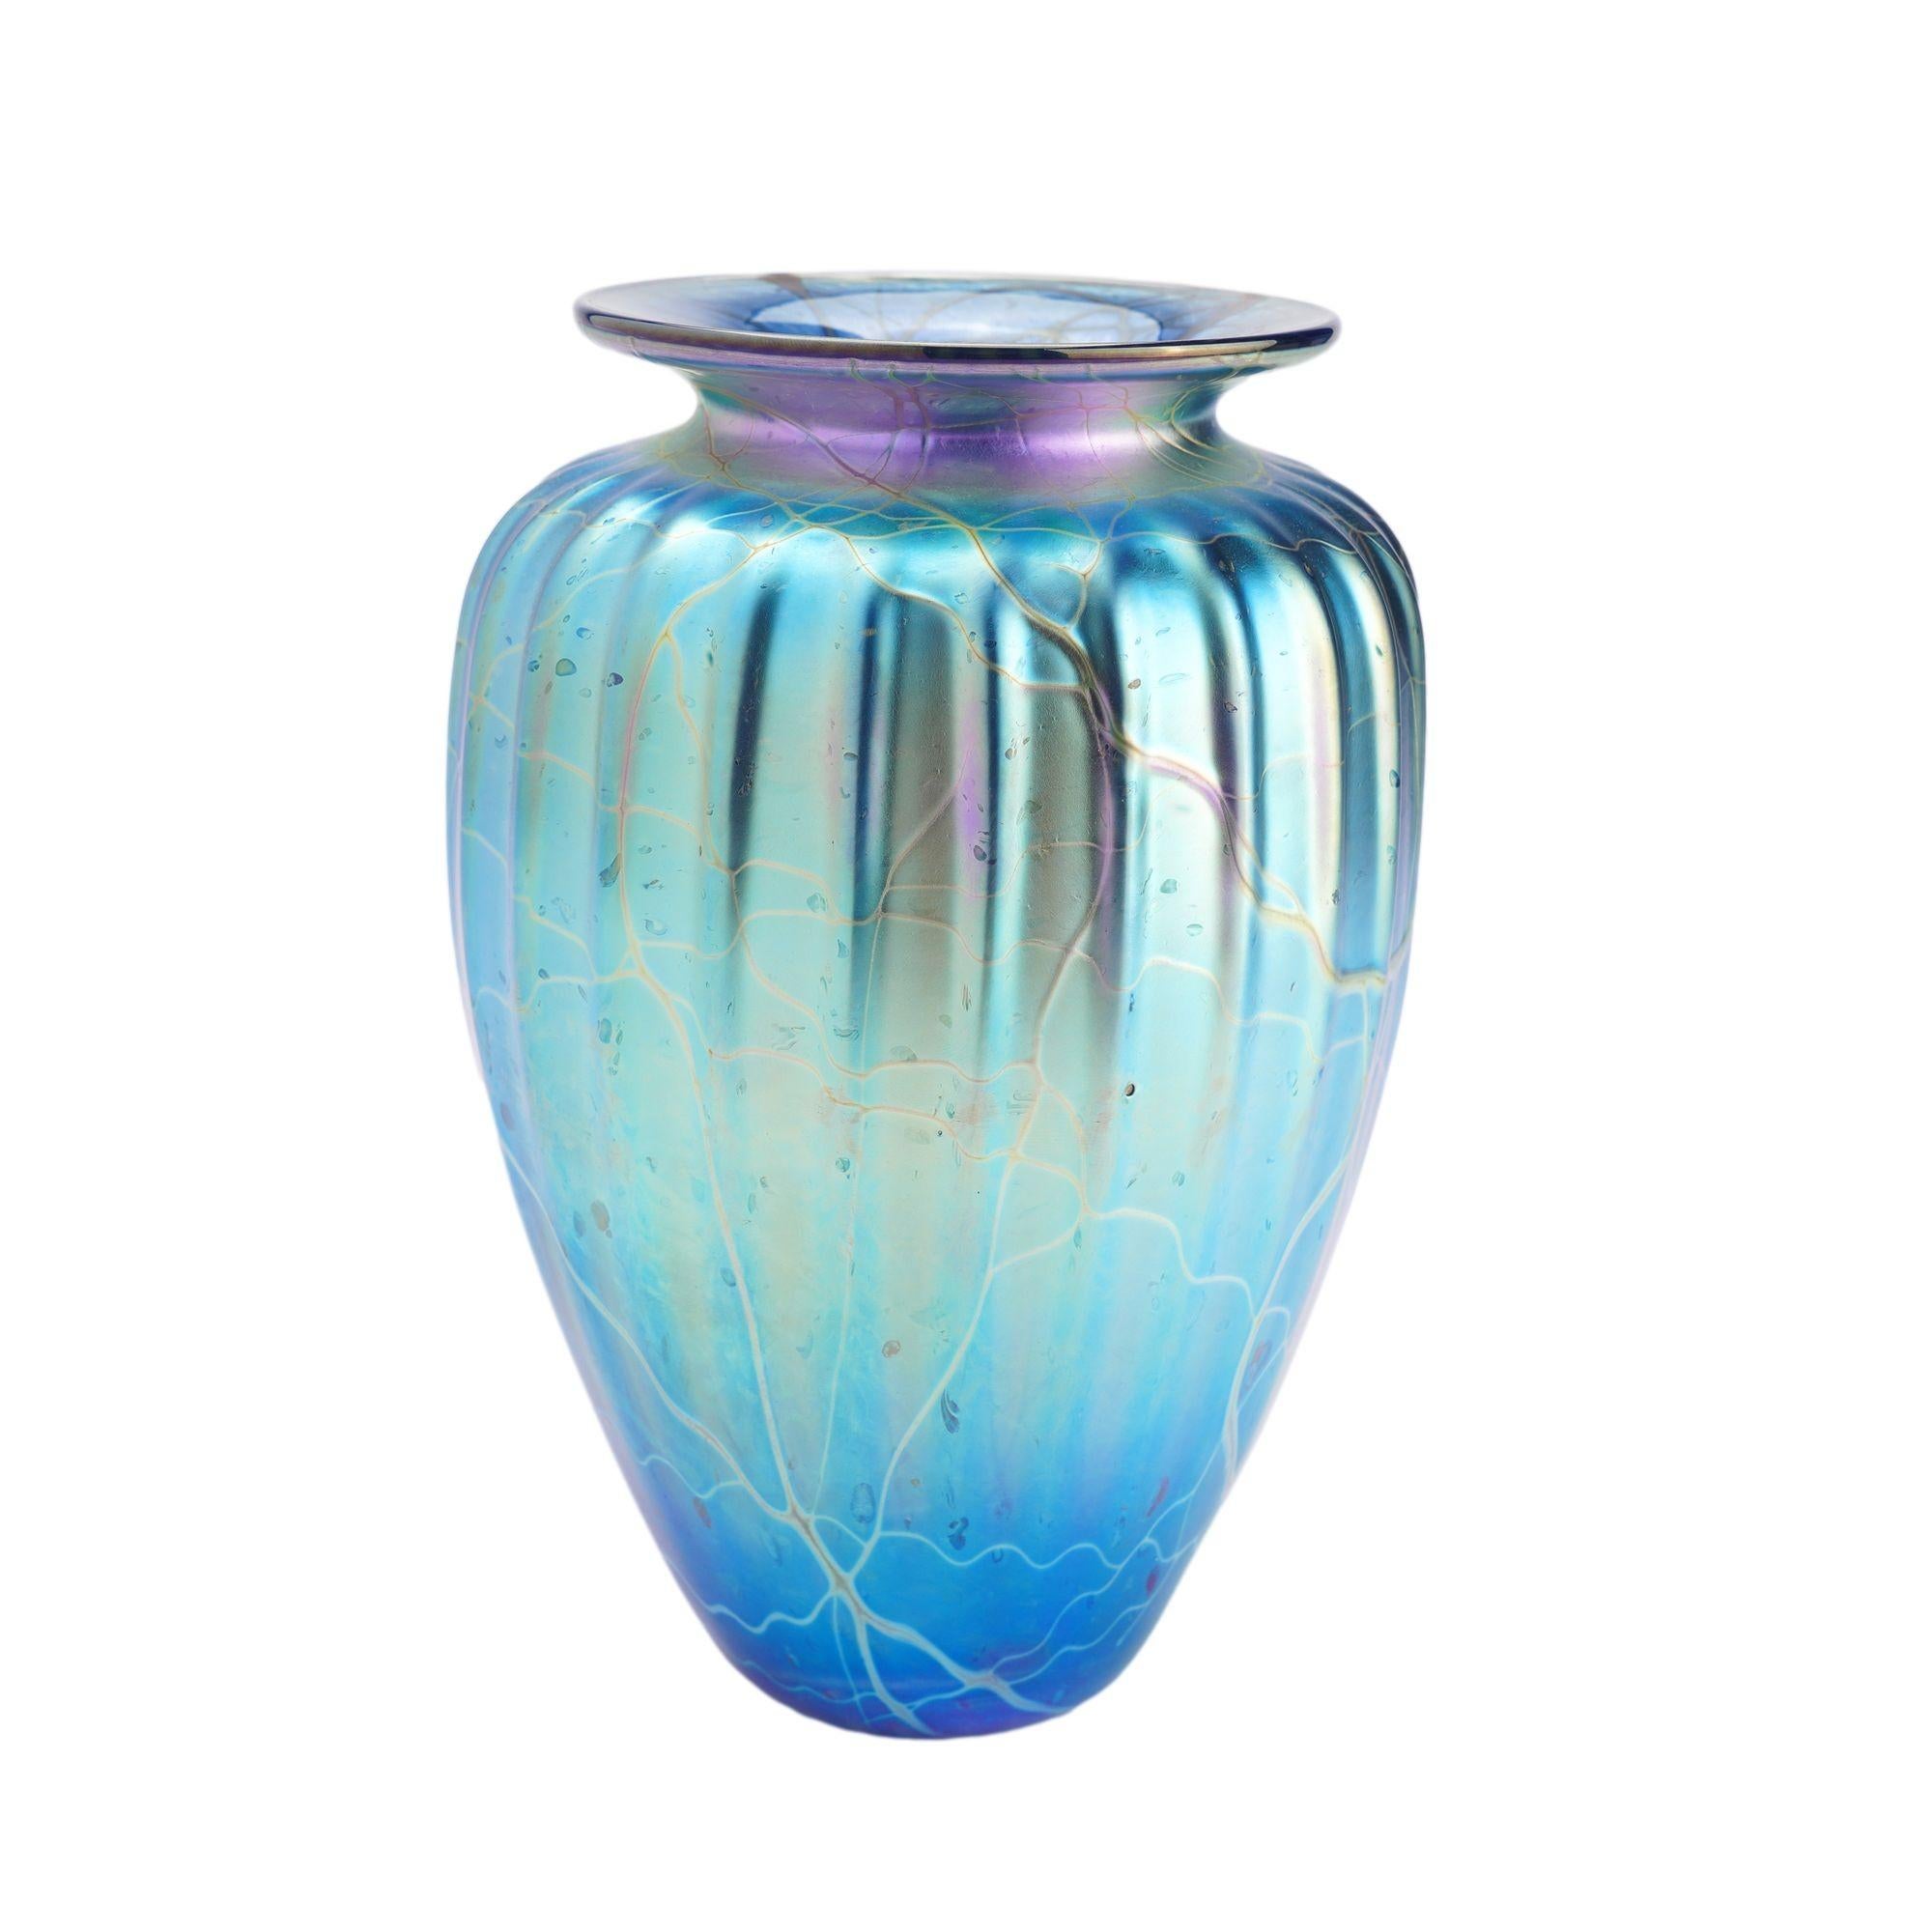 Iridescent blue blown glass vase by Mayauel Ward, 2015